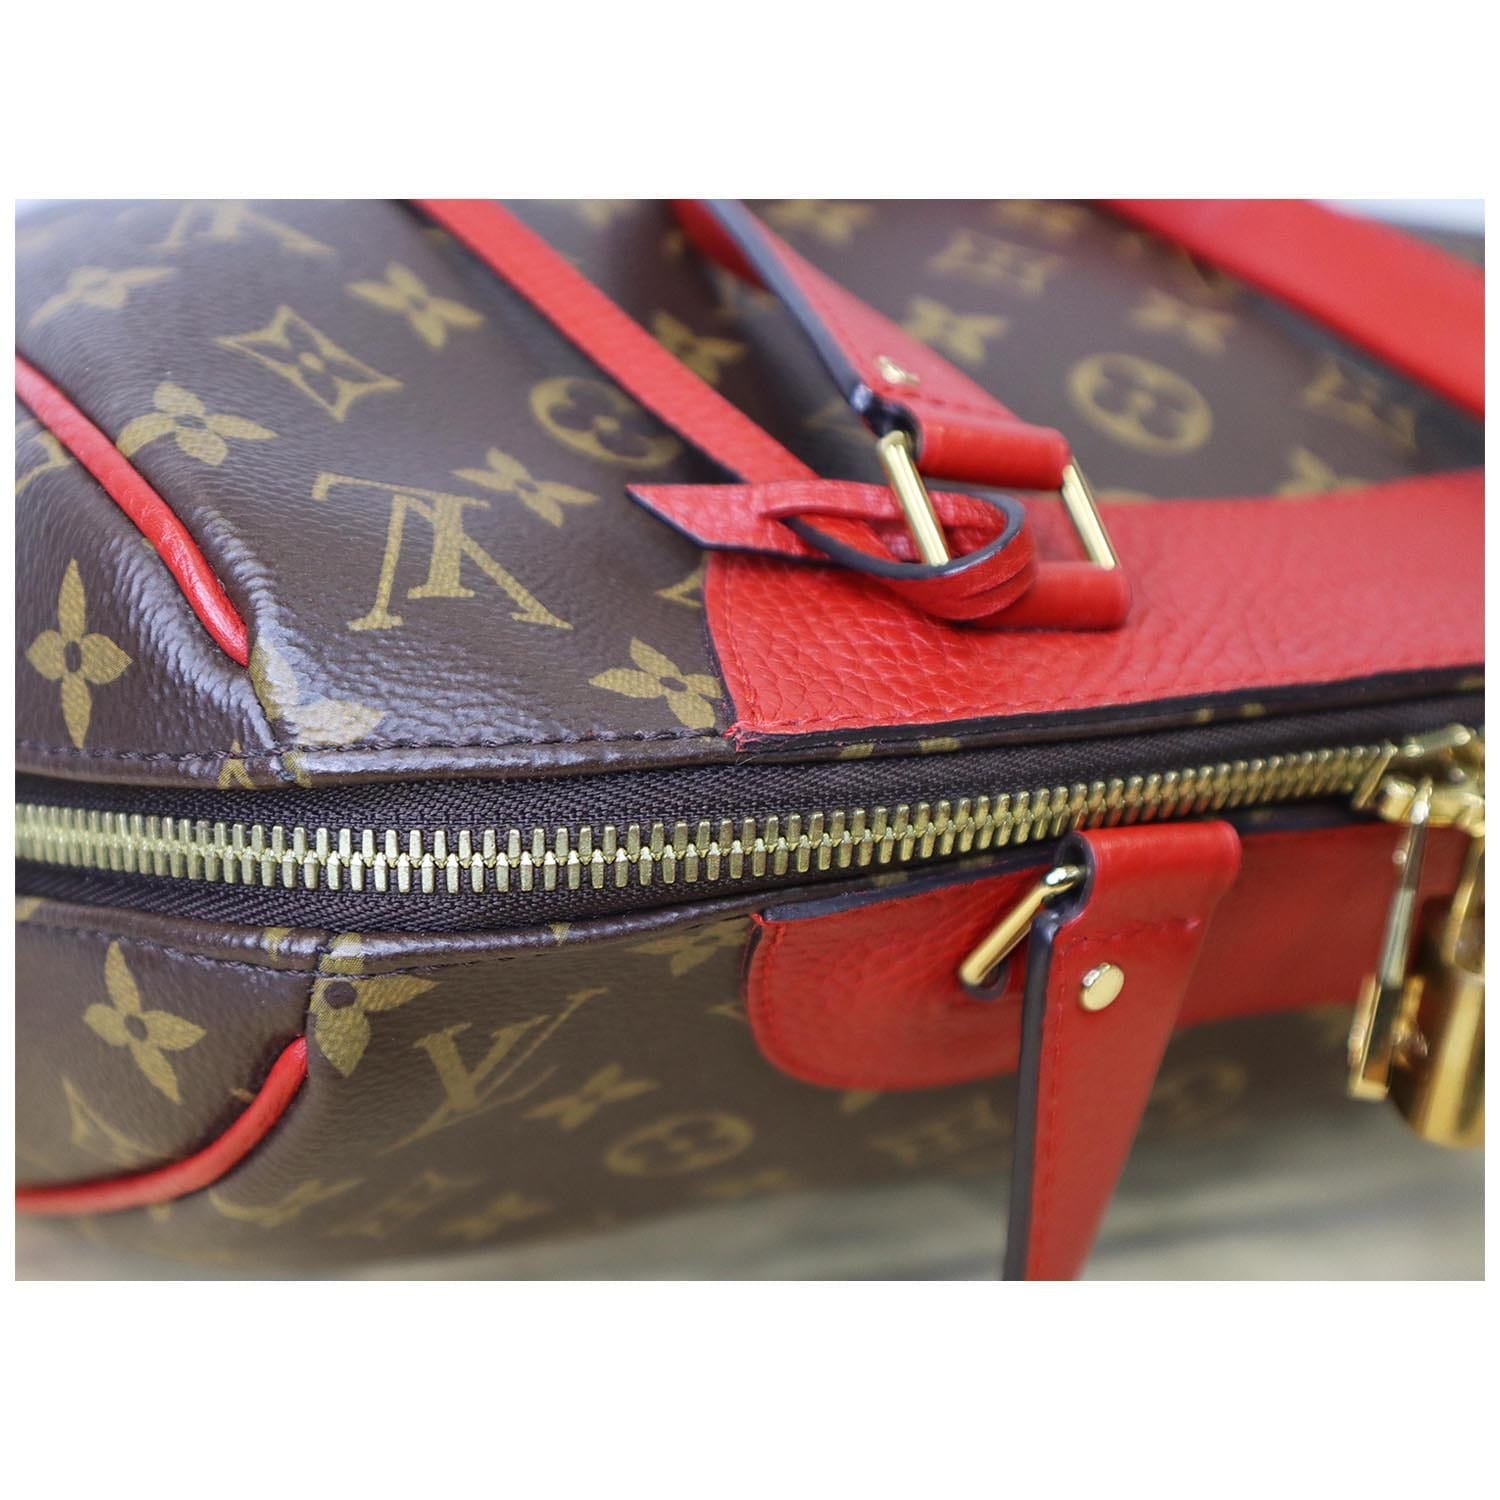 Louis Vuitton Monogram Canvas Retiro Bag Reference Guide - Spotted Fashion